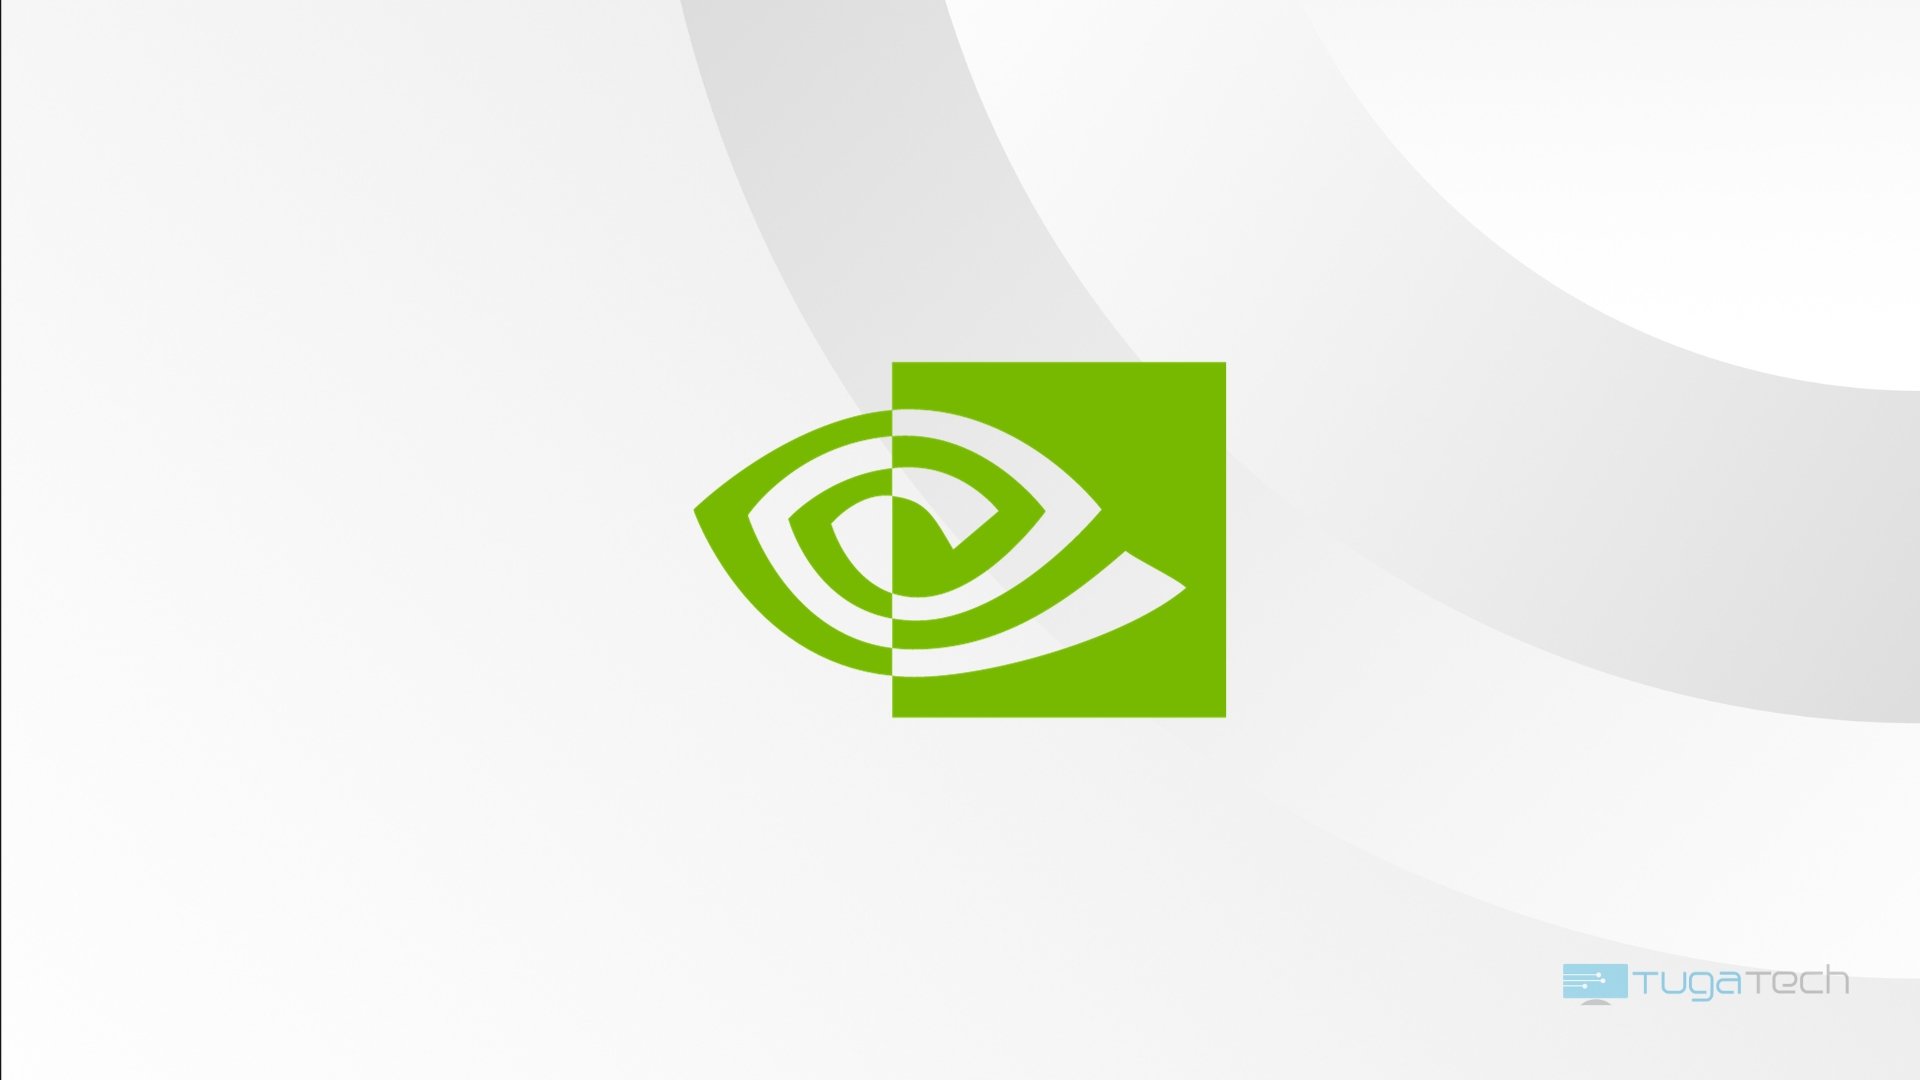 Logo da Nvidia